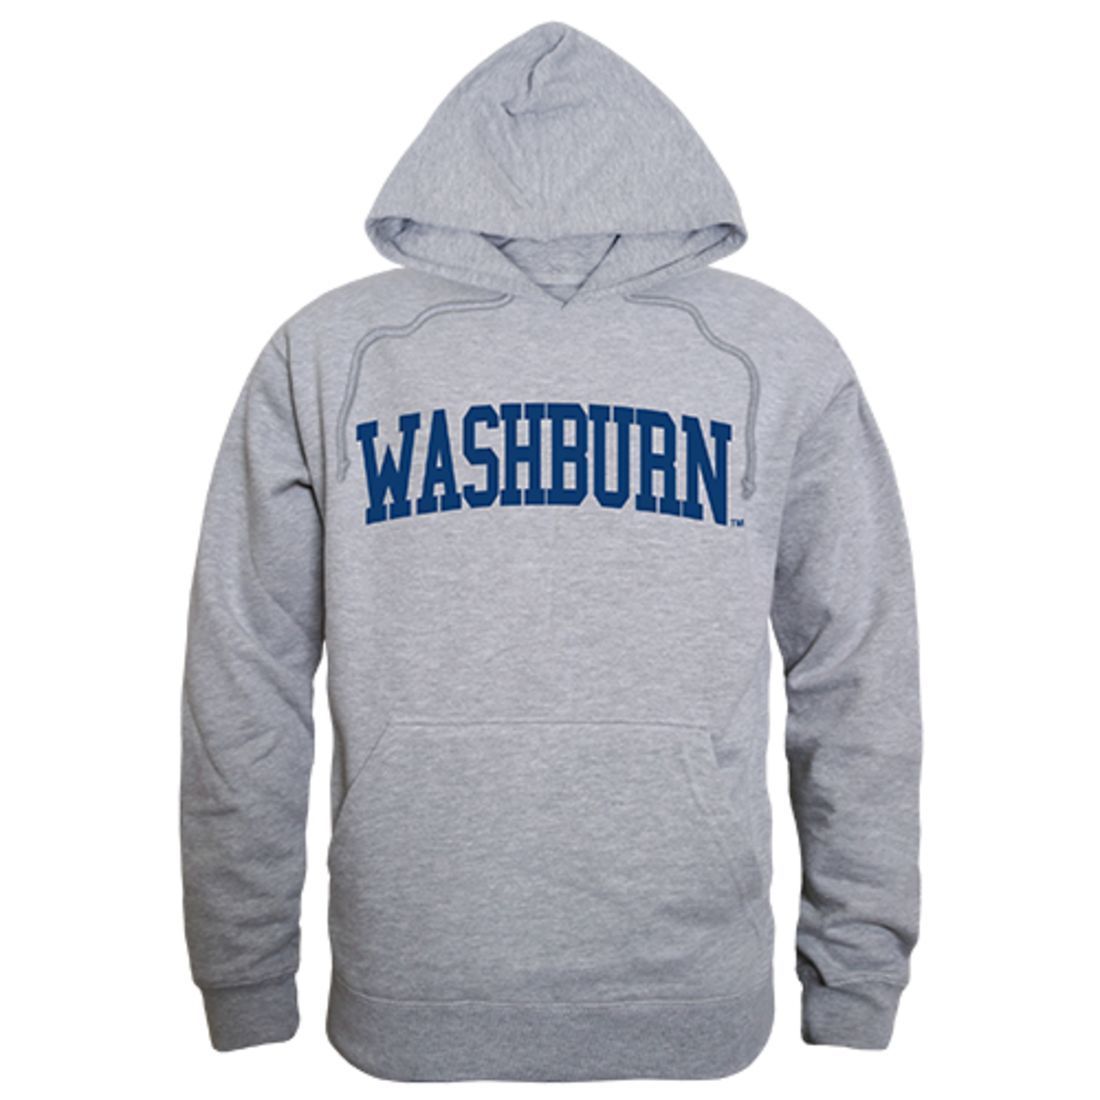 Washburn University Game Day Hoodie Sweatshirt Heather Grey-Campus-Wardrobe